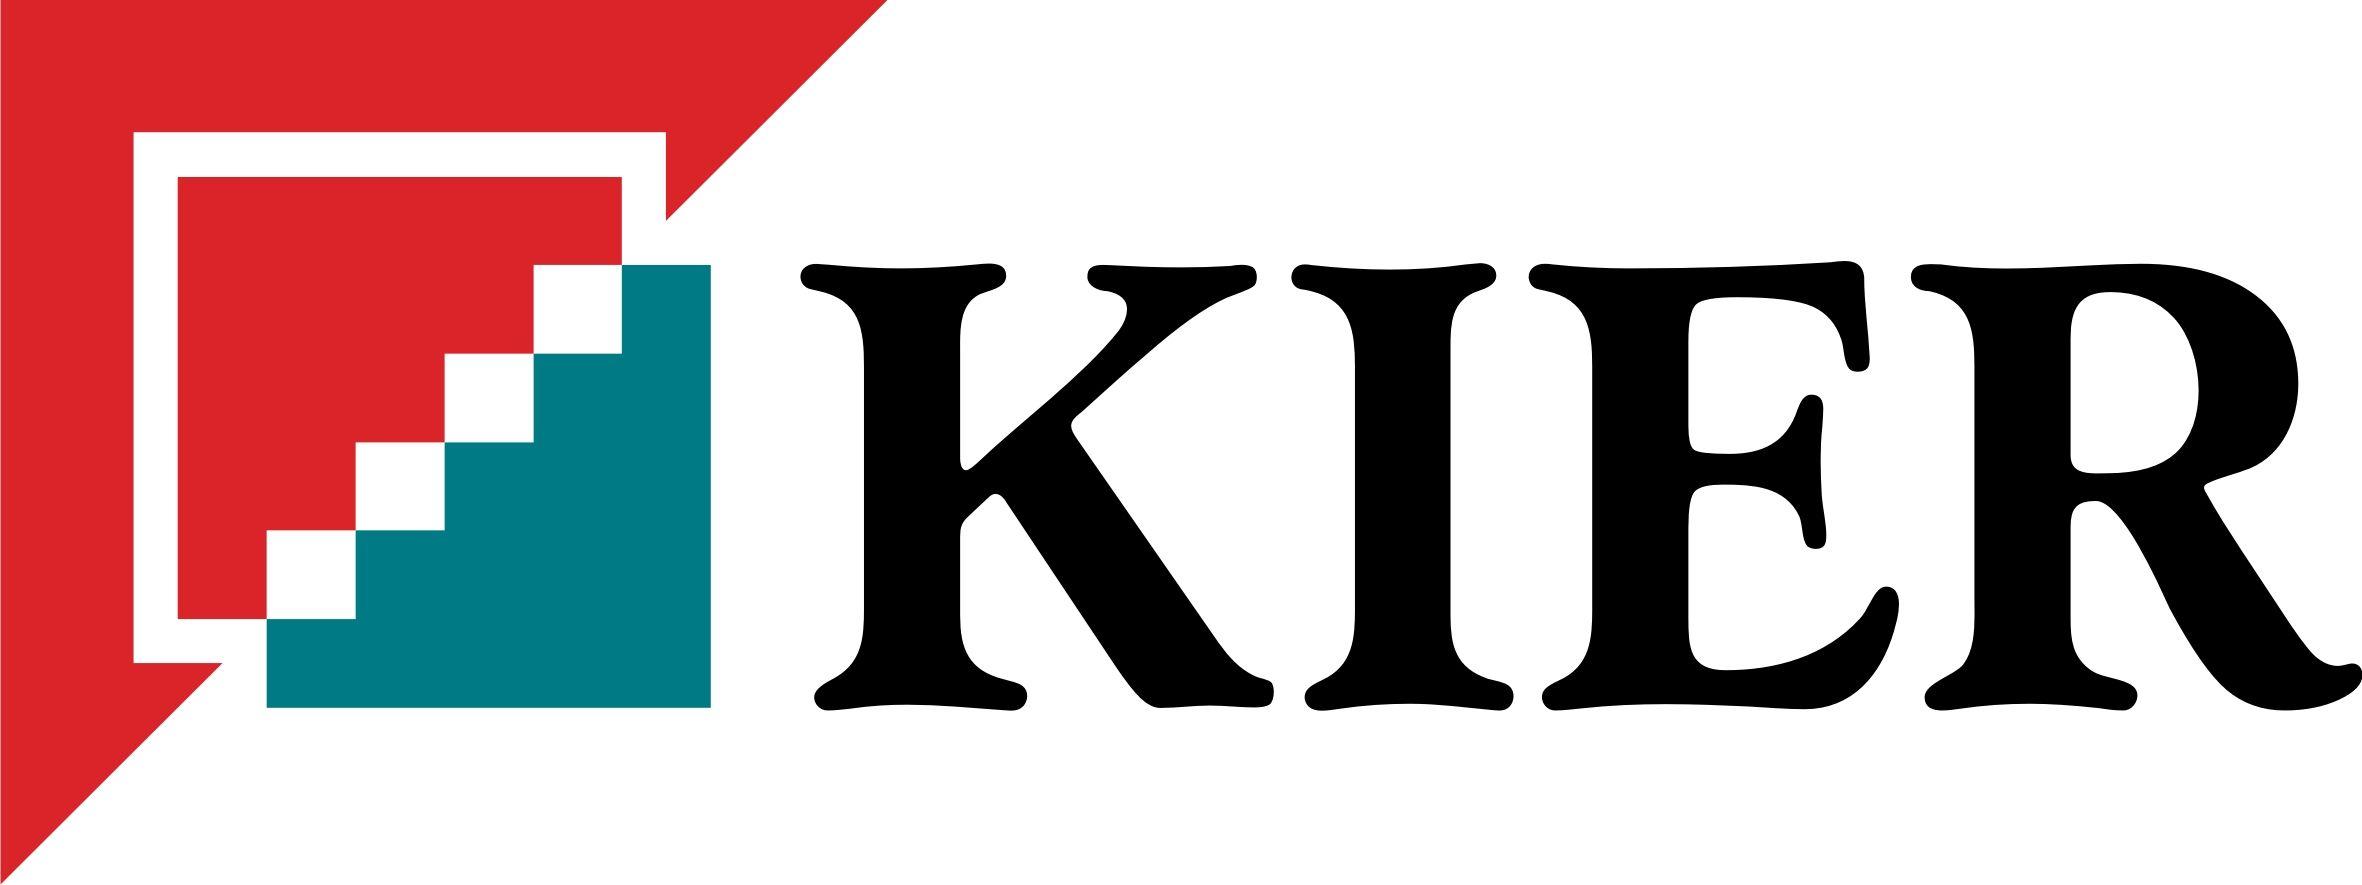 Kier Logo - Kier Logo | PM Training